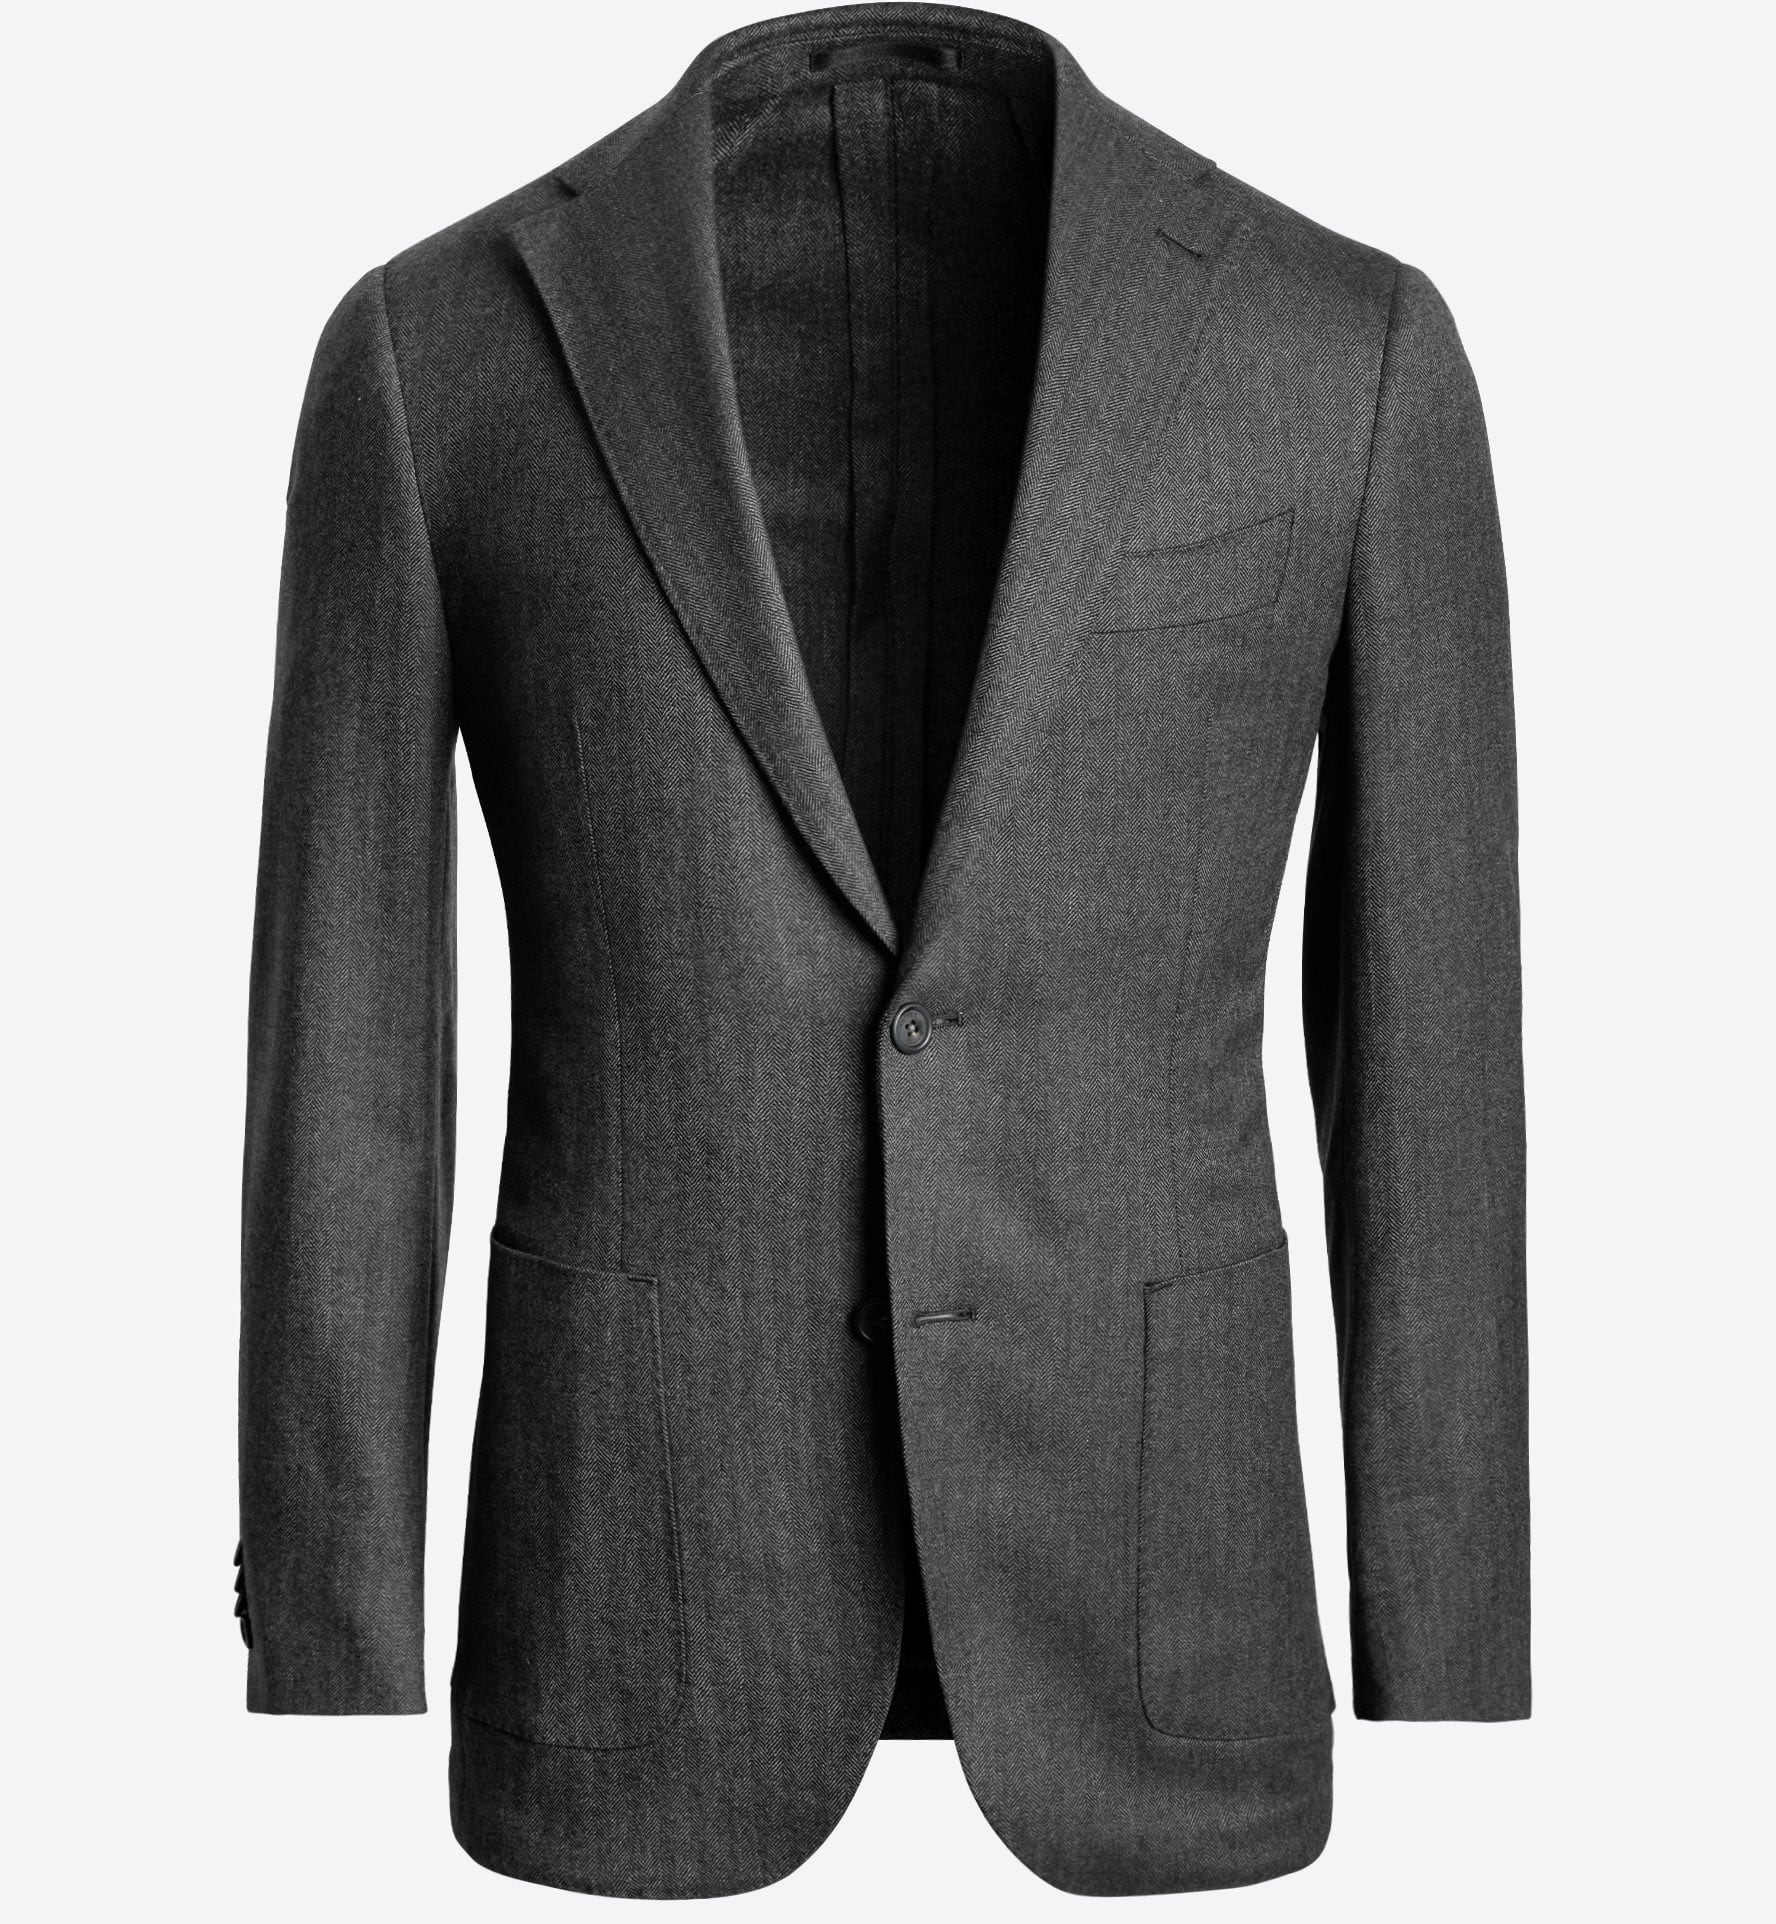 Bedford Charcoal Wool Cashmere Herringbone Jacket - Custom Fit Tailored ...